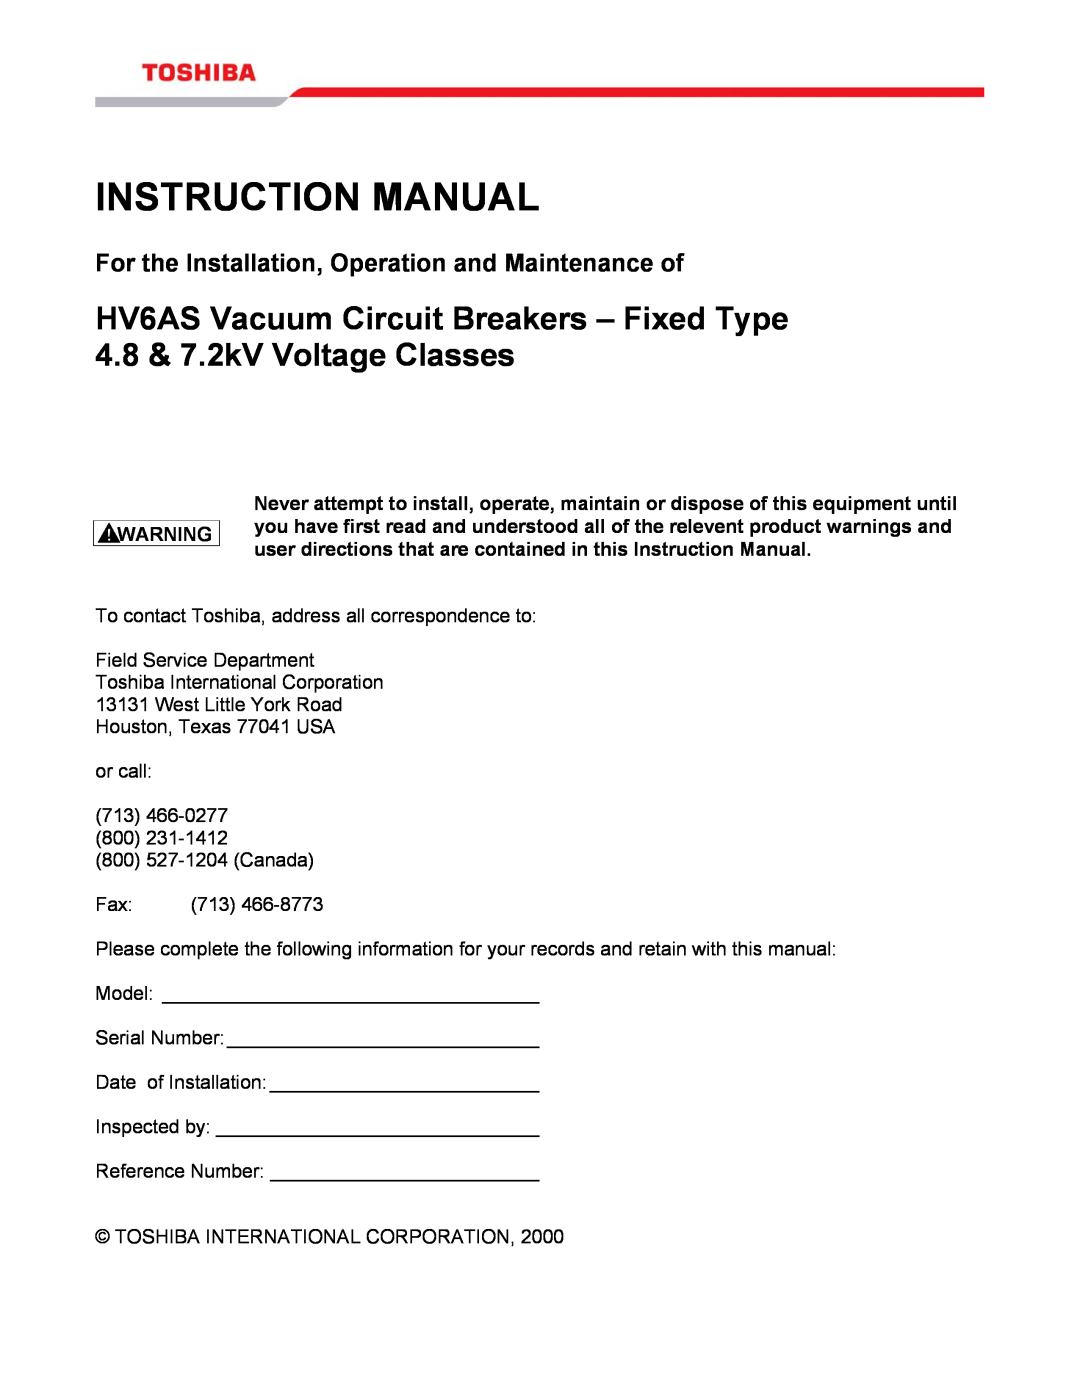 Toshiba HV6AS instruction manual 